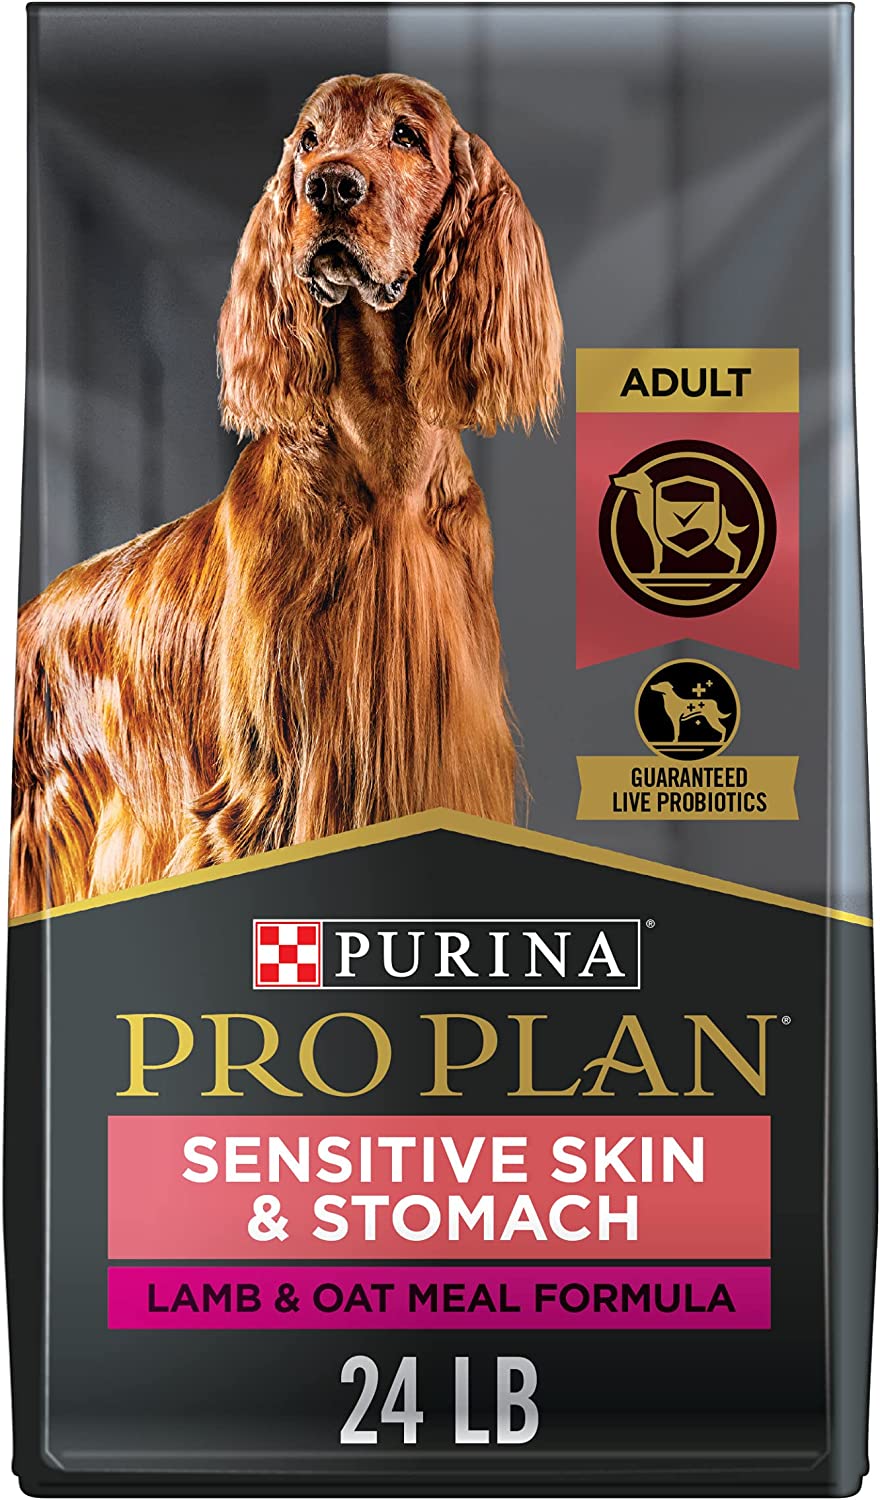 Pro Plan Adult Sensitive Dog Food